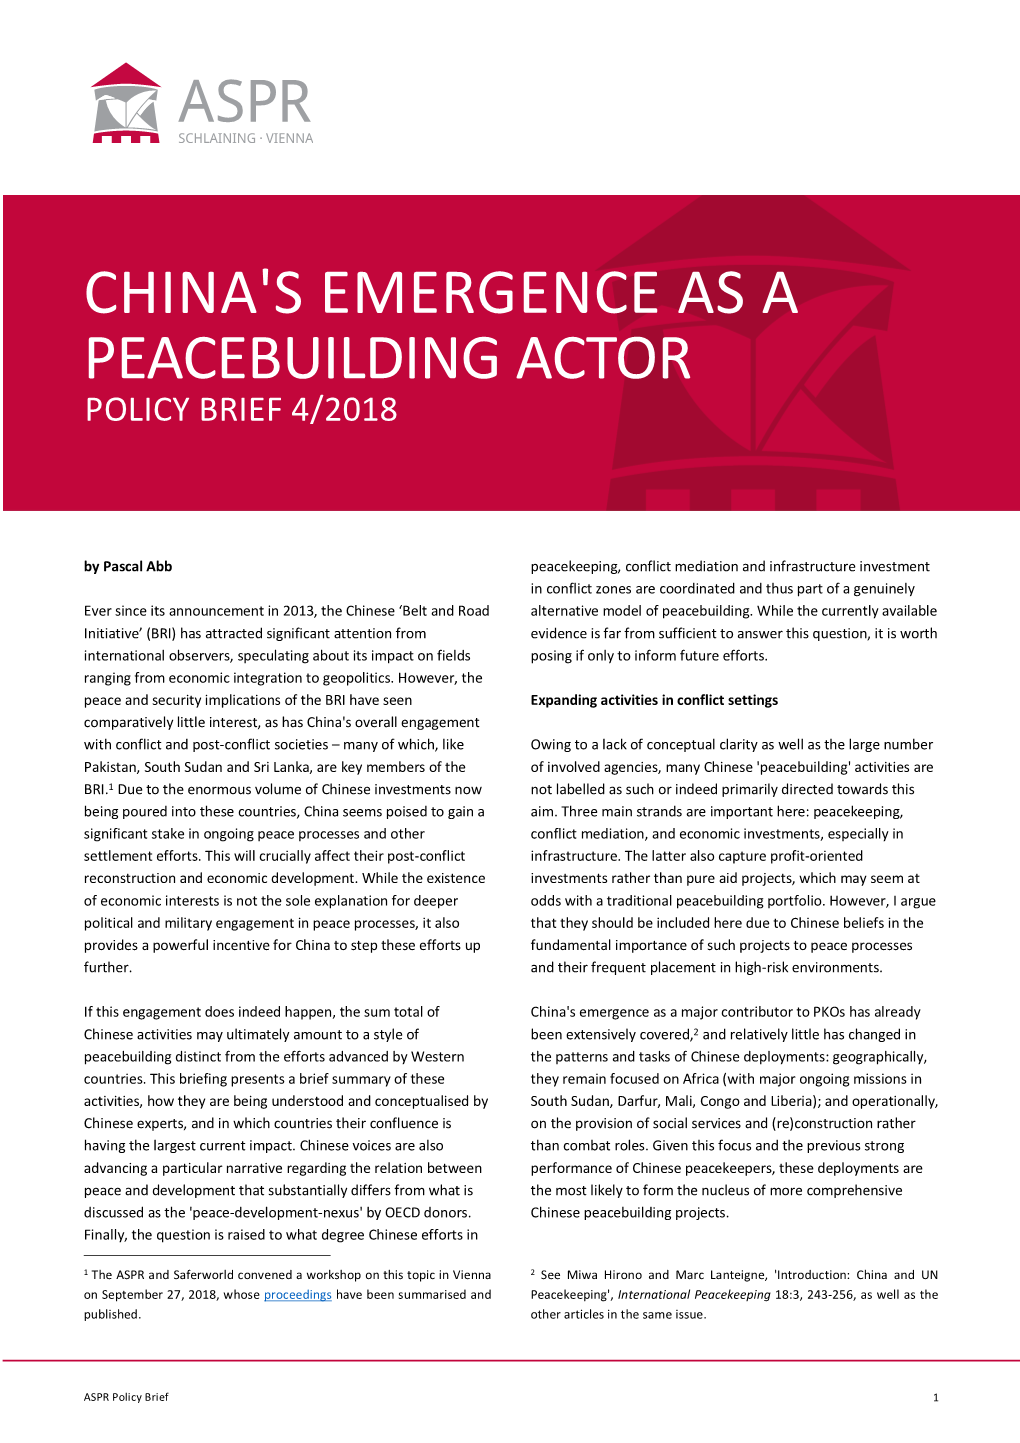 Aspr China's Emergence As a Peacebuilding Actor